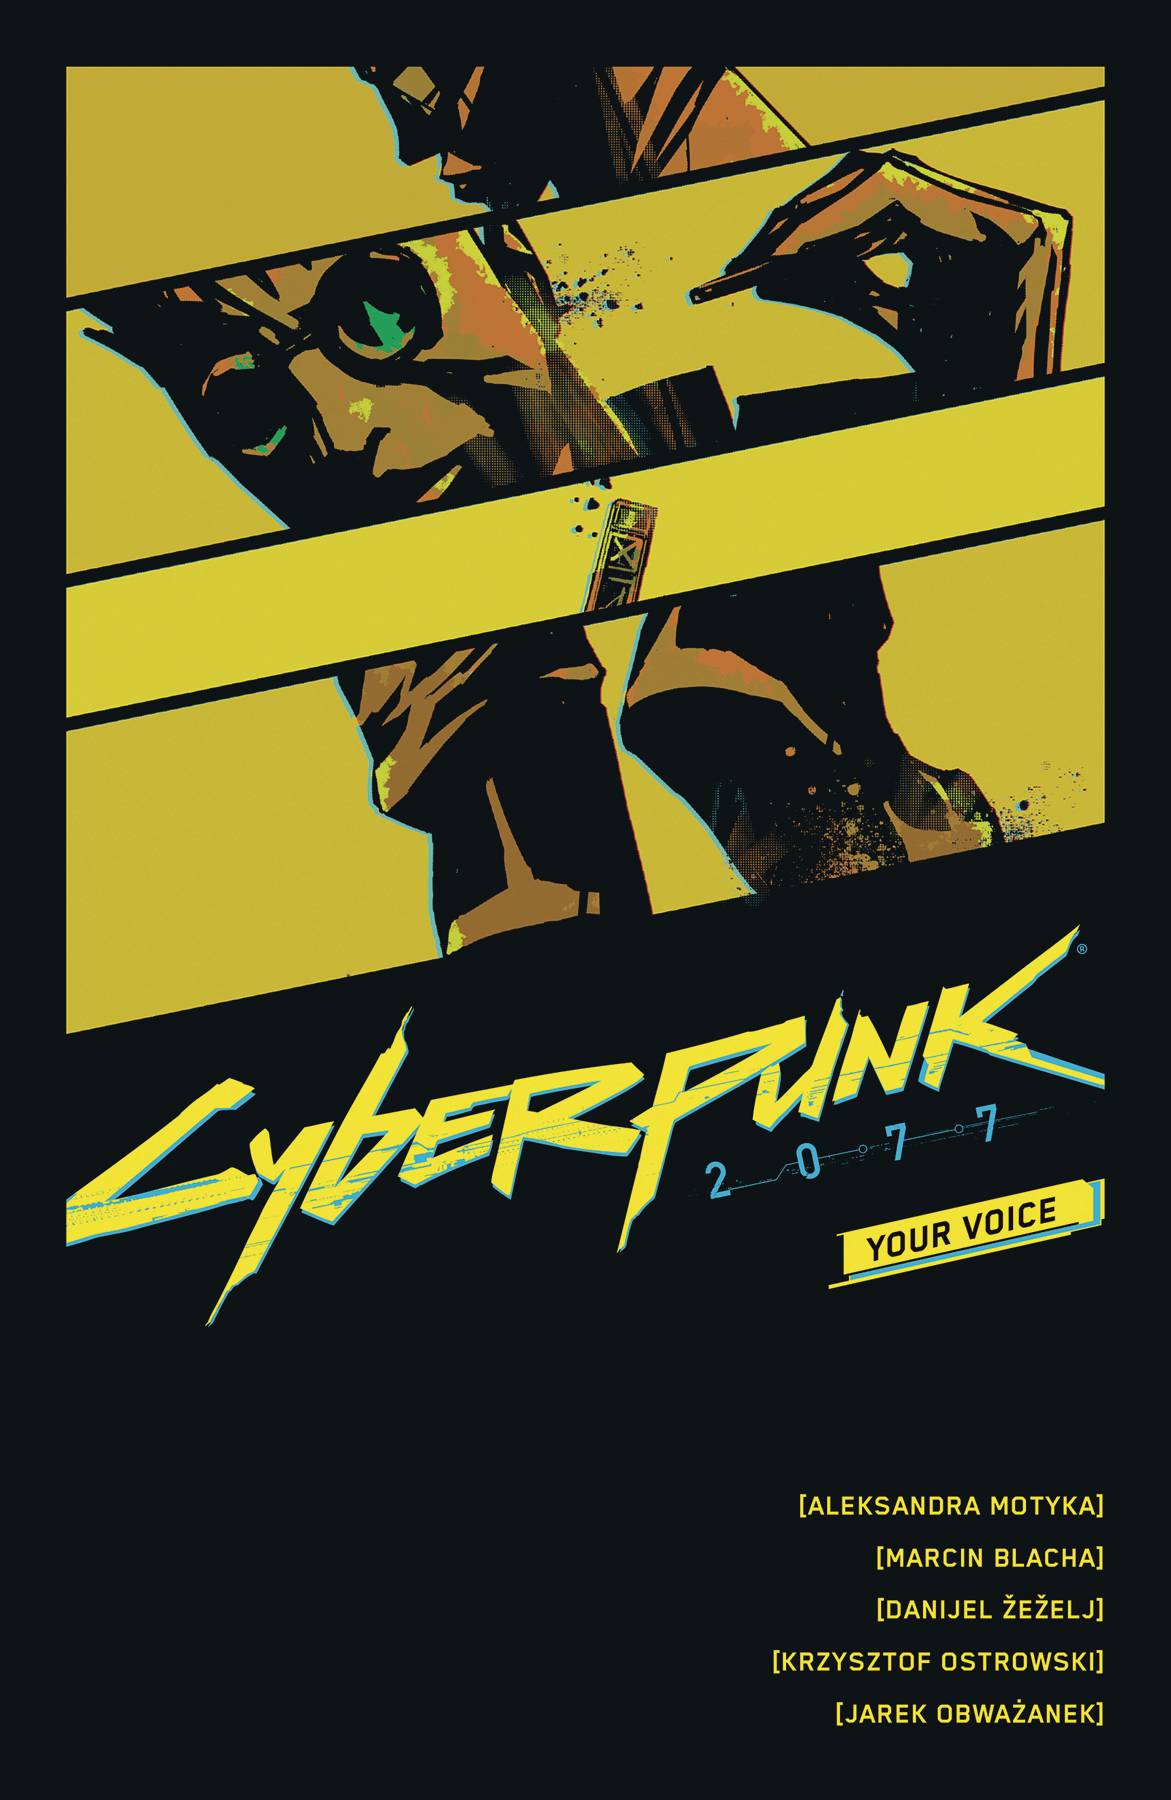 Cyberpunk 2077: Your Voice s/c